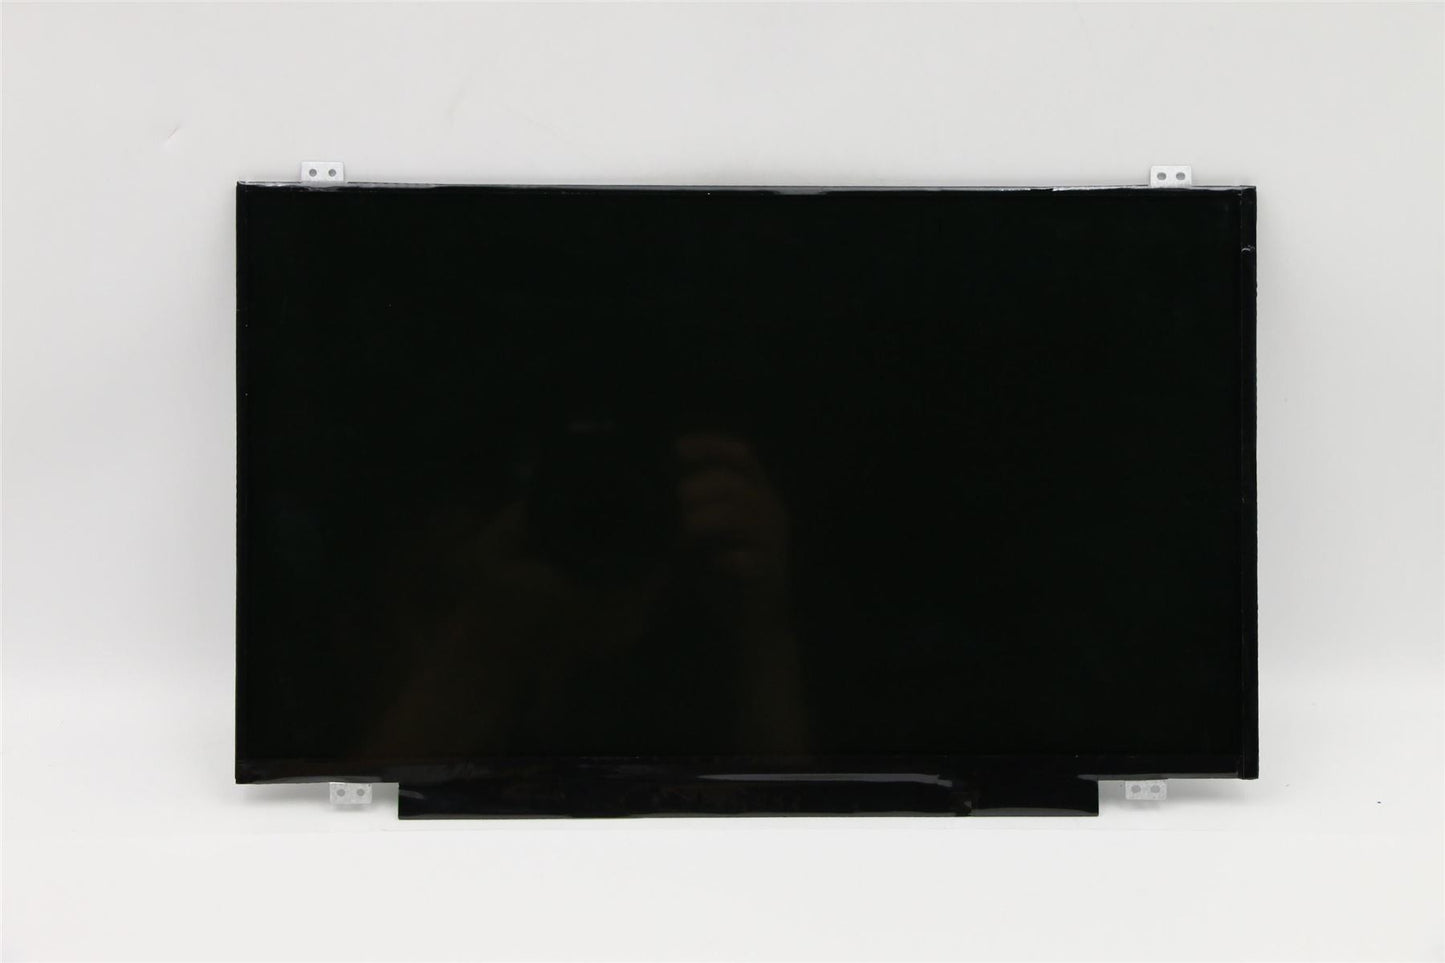 Lenovo ThinkPad E420 E425 S430 LCD Screen Display Panel 04W0420